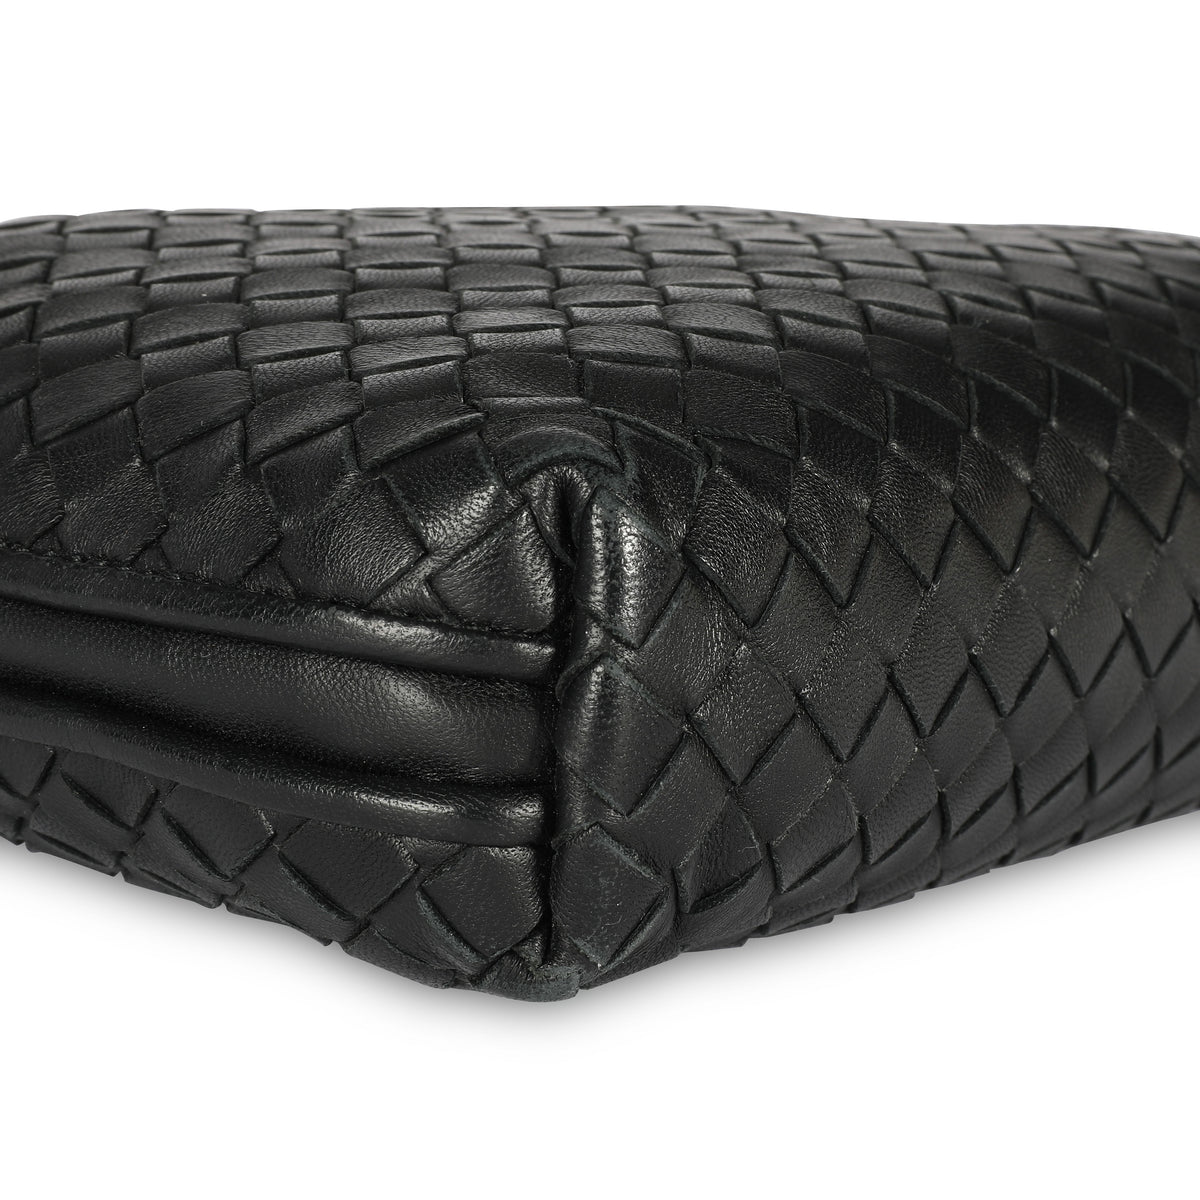 Bottega Veneta Nodini Small Intrecciato Leather Cross-body Bag In Grey |  ModeSens